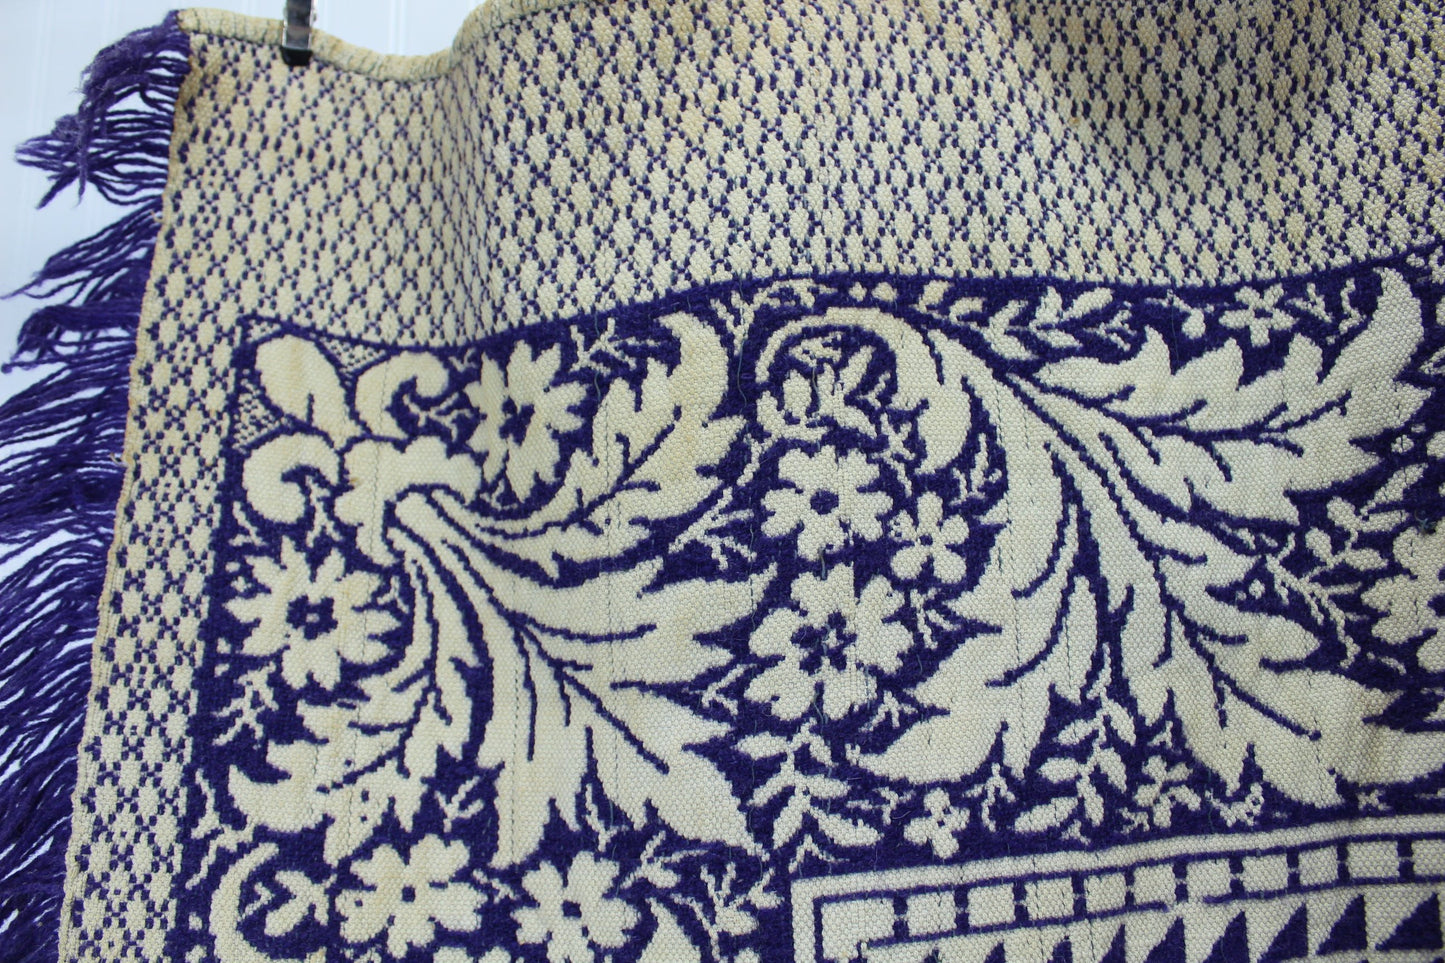 Antique Jacquard Coverlet - Indigo Purple Floral Medallion Geometric - Initials A E - Intricate All Over Design summer winter light dark